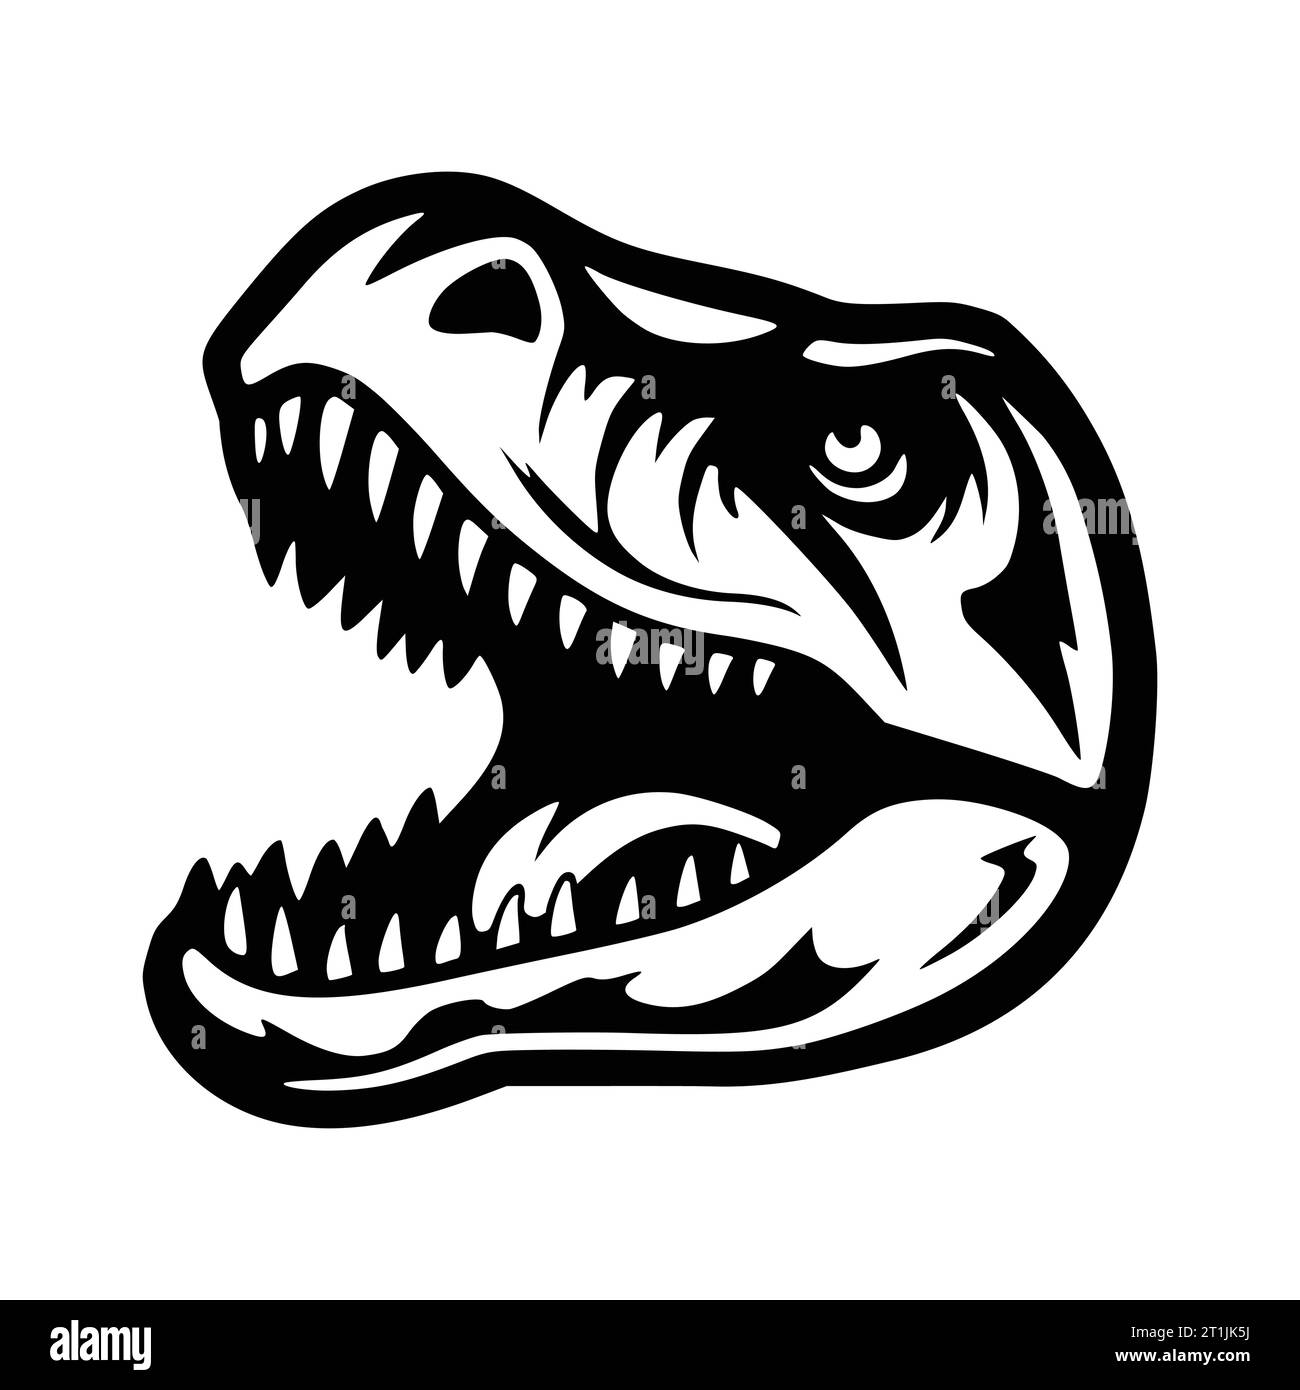 tyrannosaurus dinosaur wild animal head illustration for logo or symbol Stock Vector